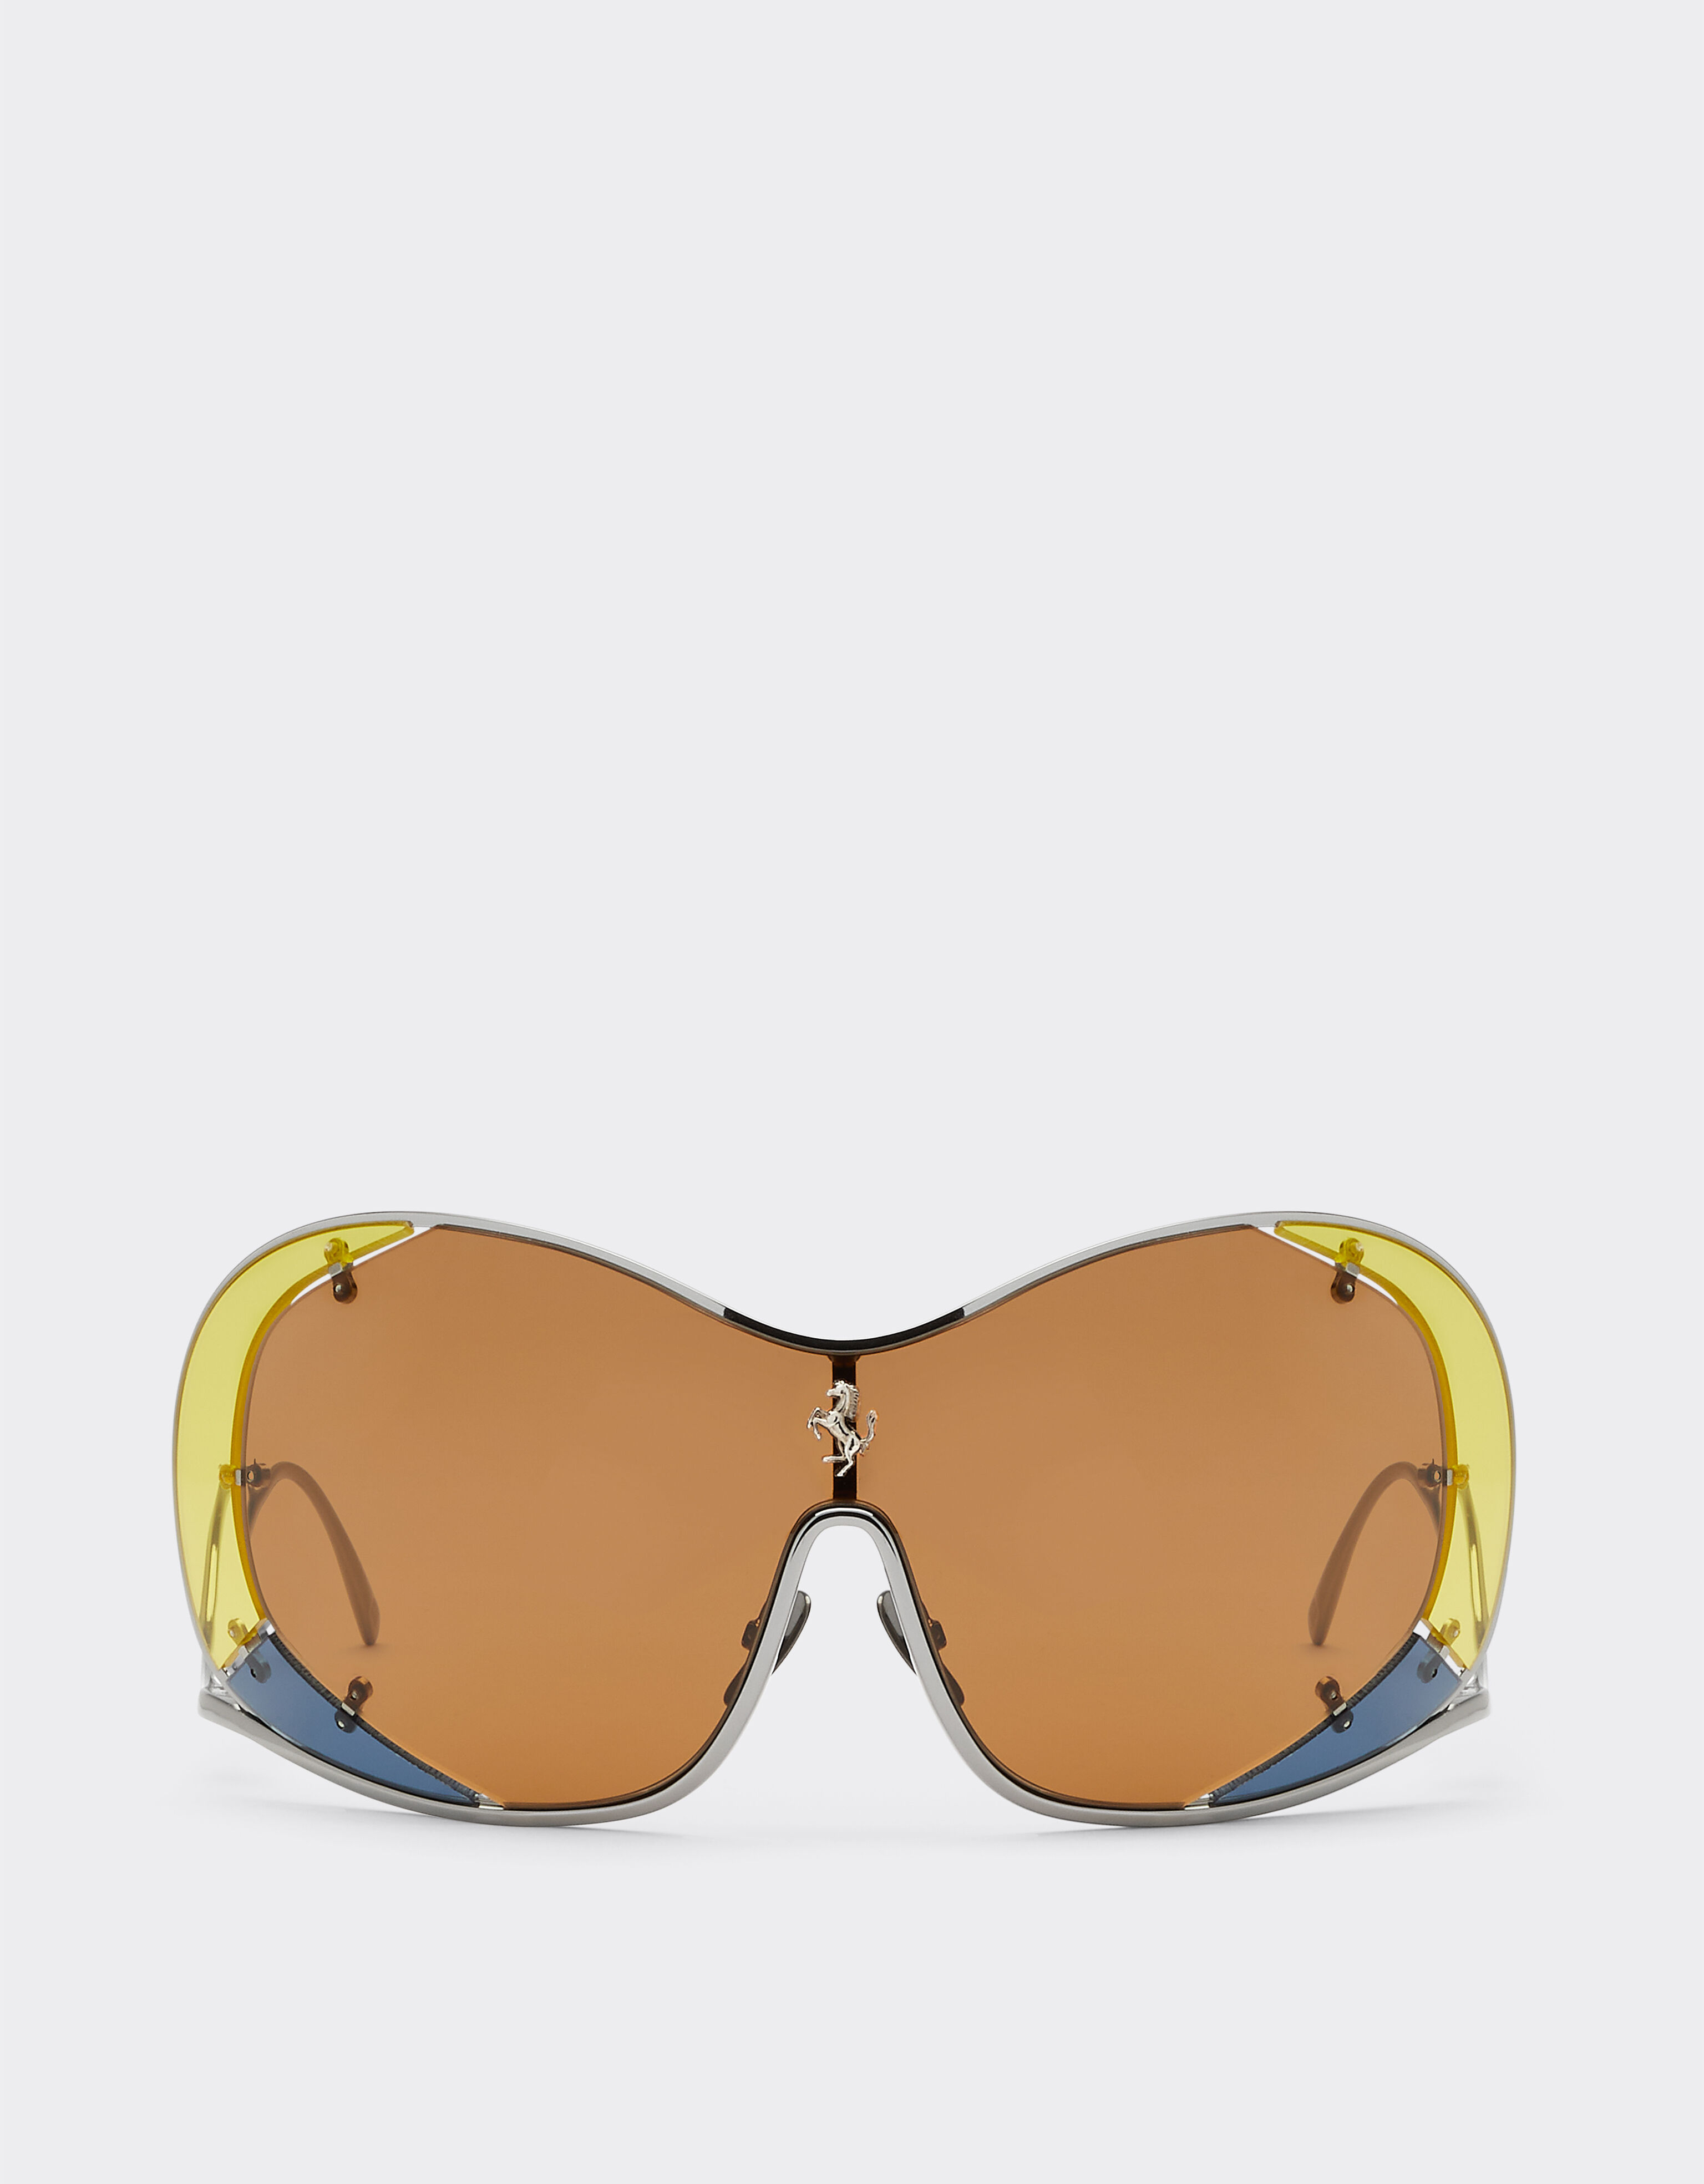 Ferrari Ferrari sunglasses with brown lenses 深灰色 F0638f